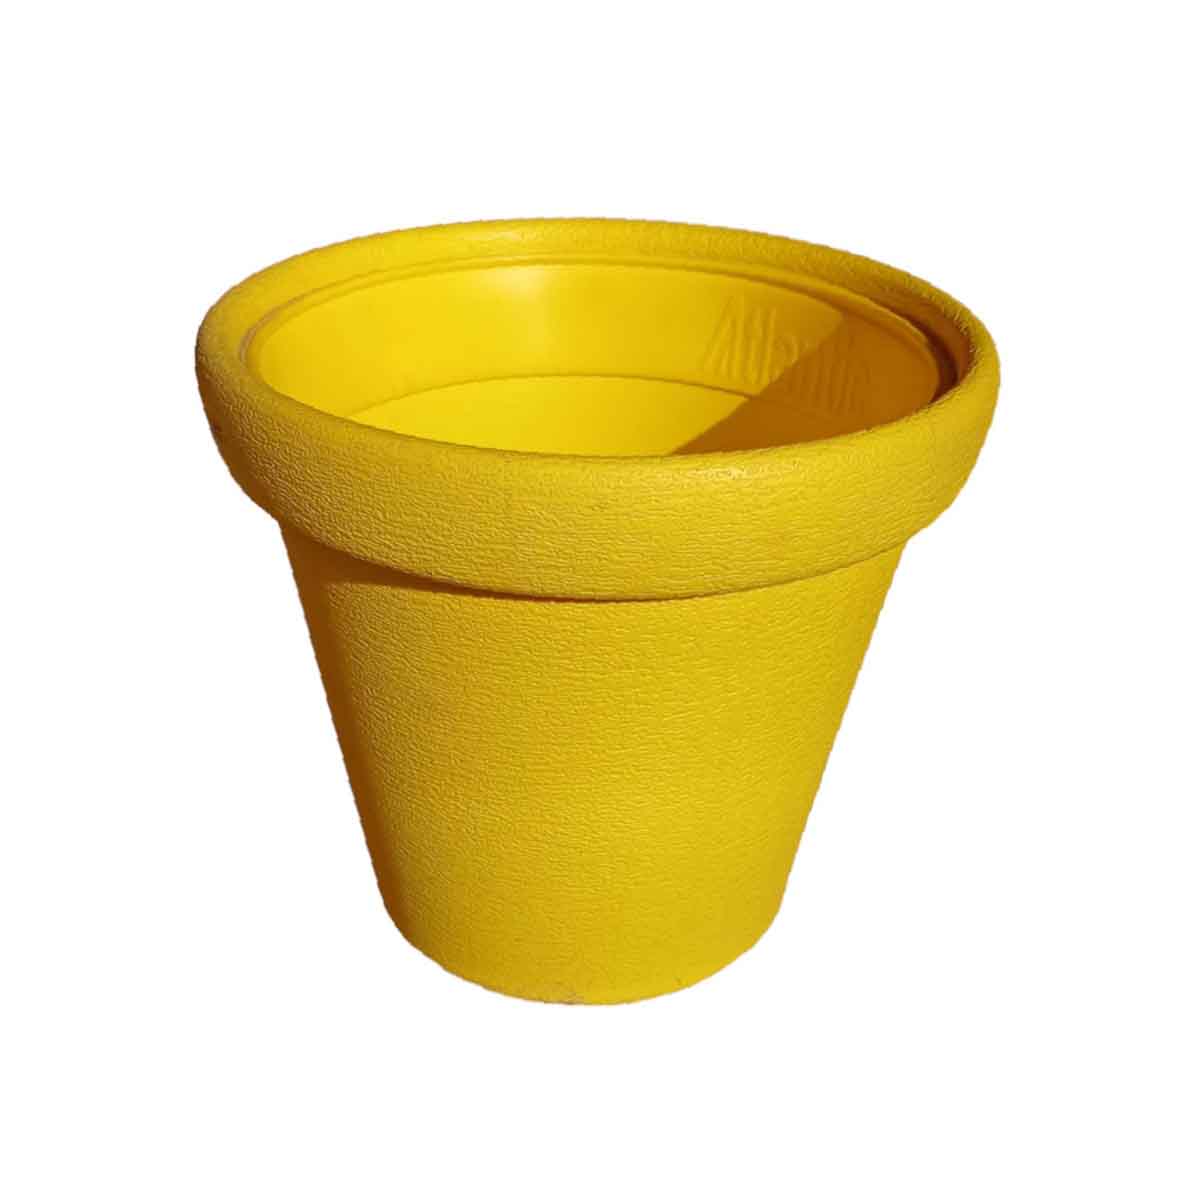 delight-yellow-pot